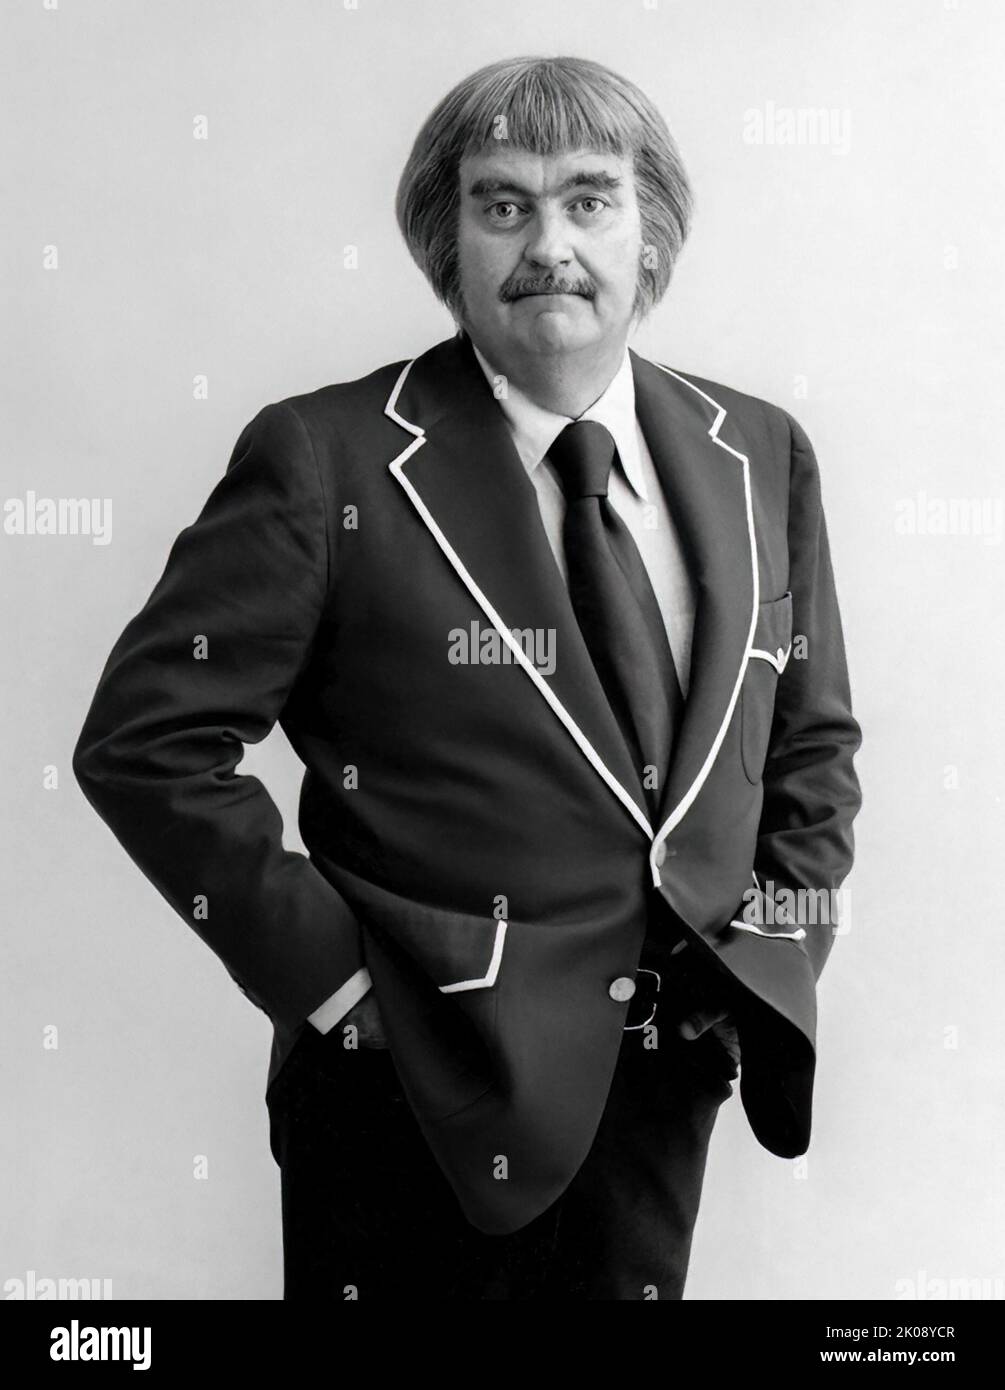 Bob Keeshan en carácter como Capitán Canguro del popular programa infantil Capitán Canguro que se emitió desde 1955 hasta 1984. Foto: 1977. (ESTADOS UNIDOS) Foto de stock